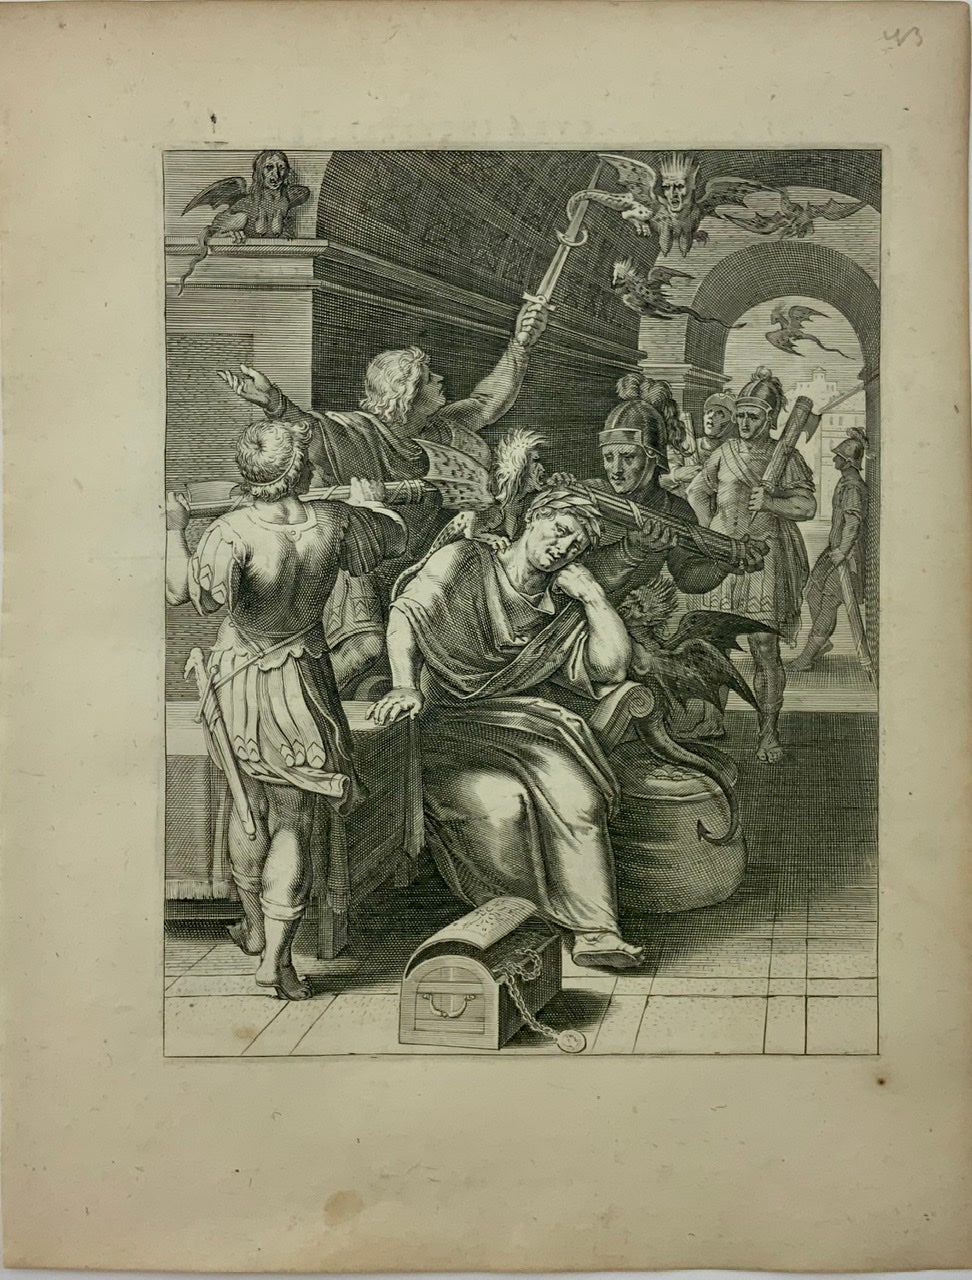 1612 Otto van Veen Quarto - Harpies Devils - The Burden of Power - Emblematica